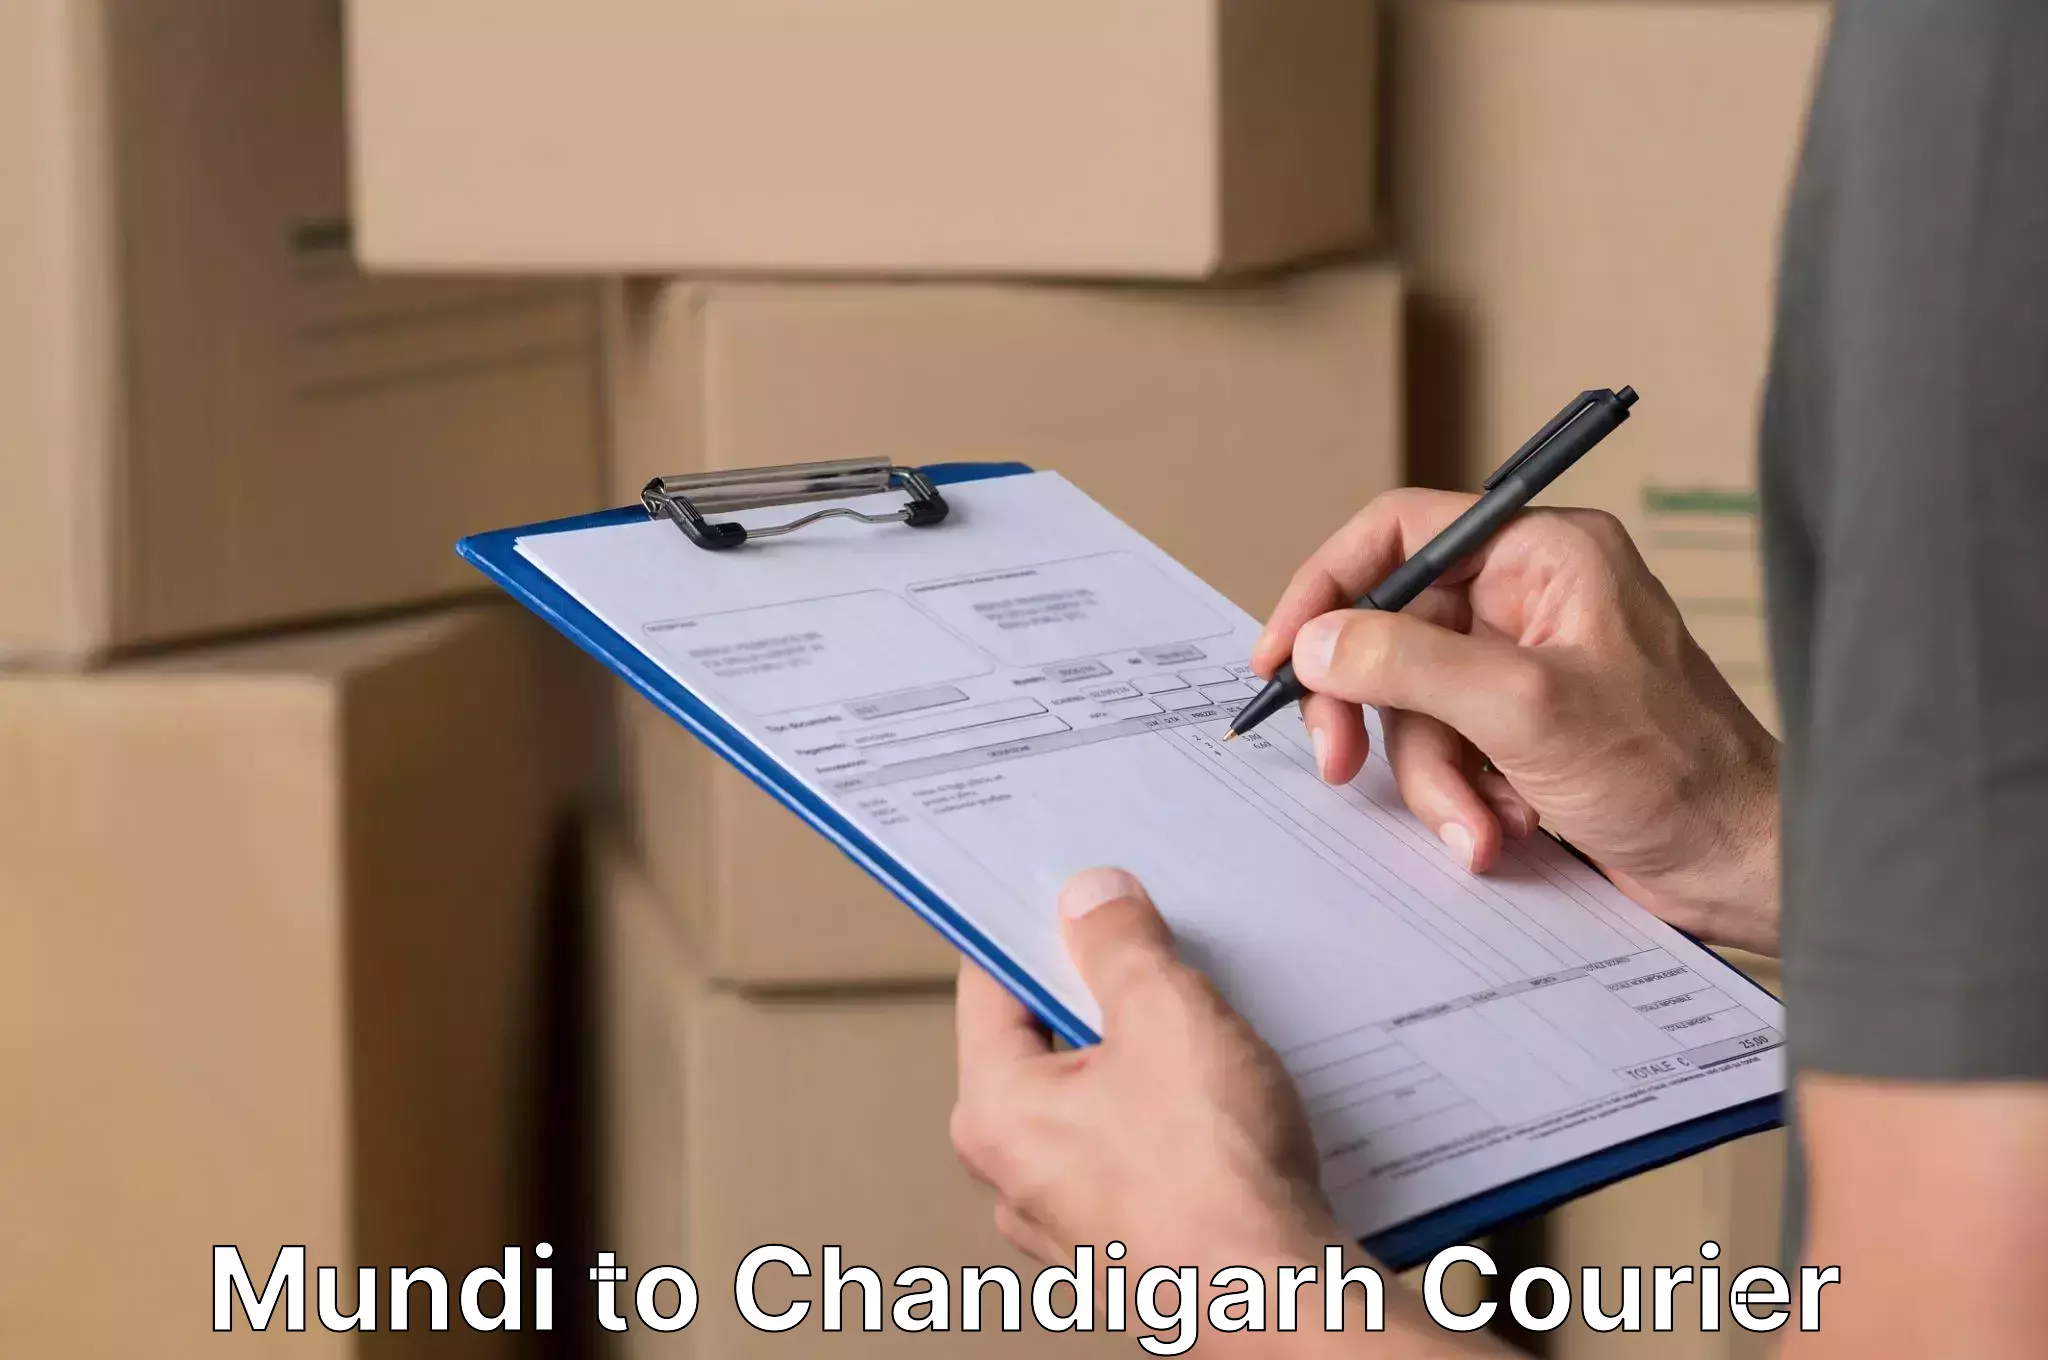 Furniture moving experts Mundi to Chandigarh